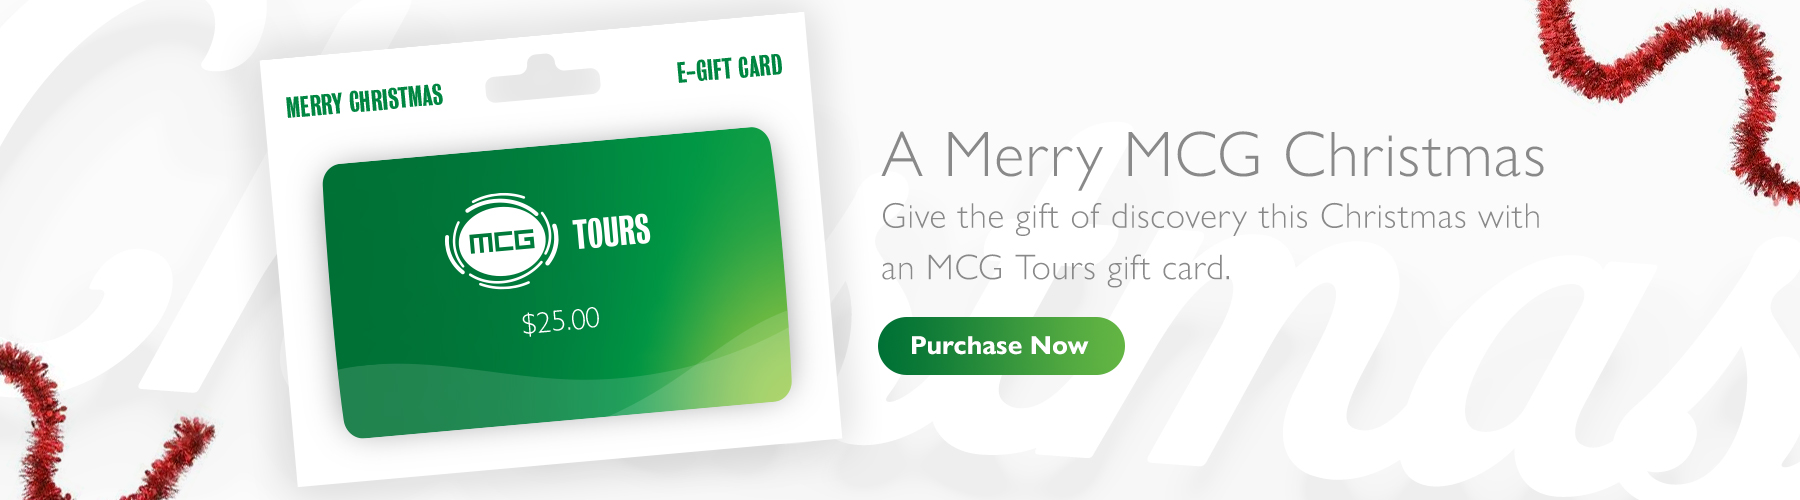 mcg tours gift card